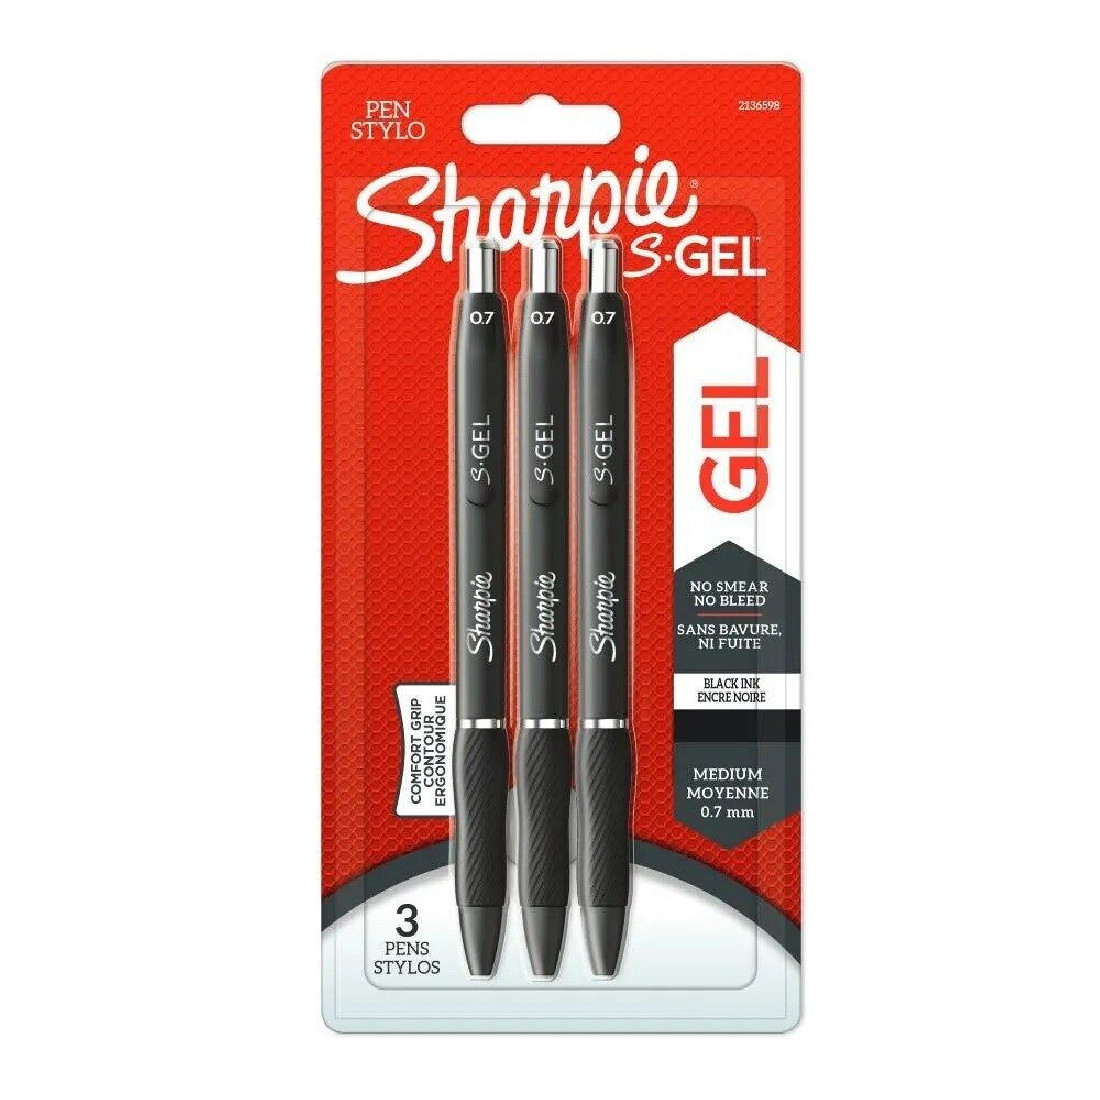 Sharpie S. GEL Black 0,7 gel pen blister of 3